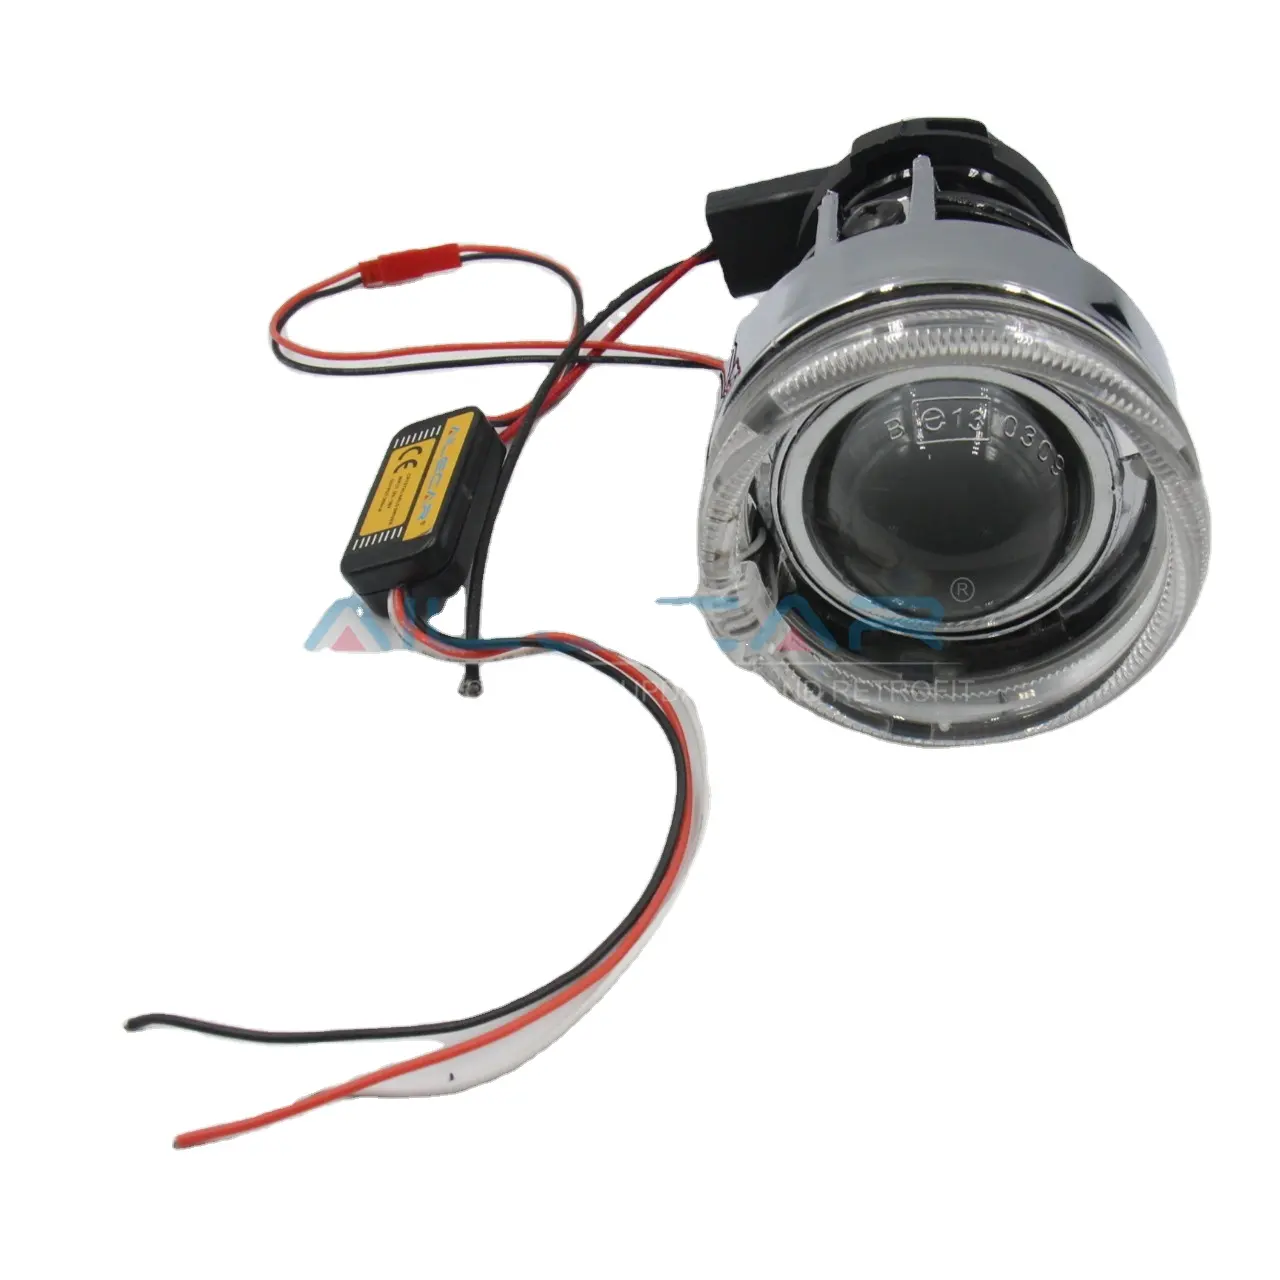 Sis lamba ışığı Bi-xenon Projektör Lens Şeffaf Lens Hid H3 Ampul Lens